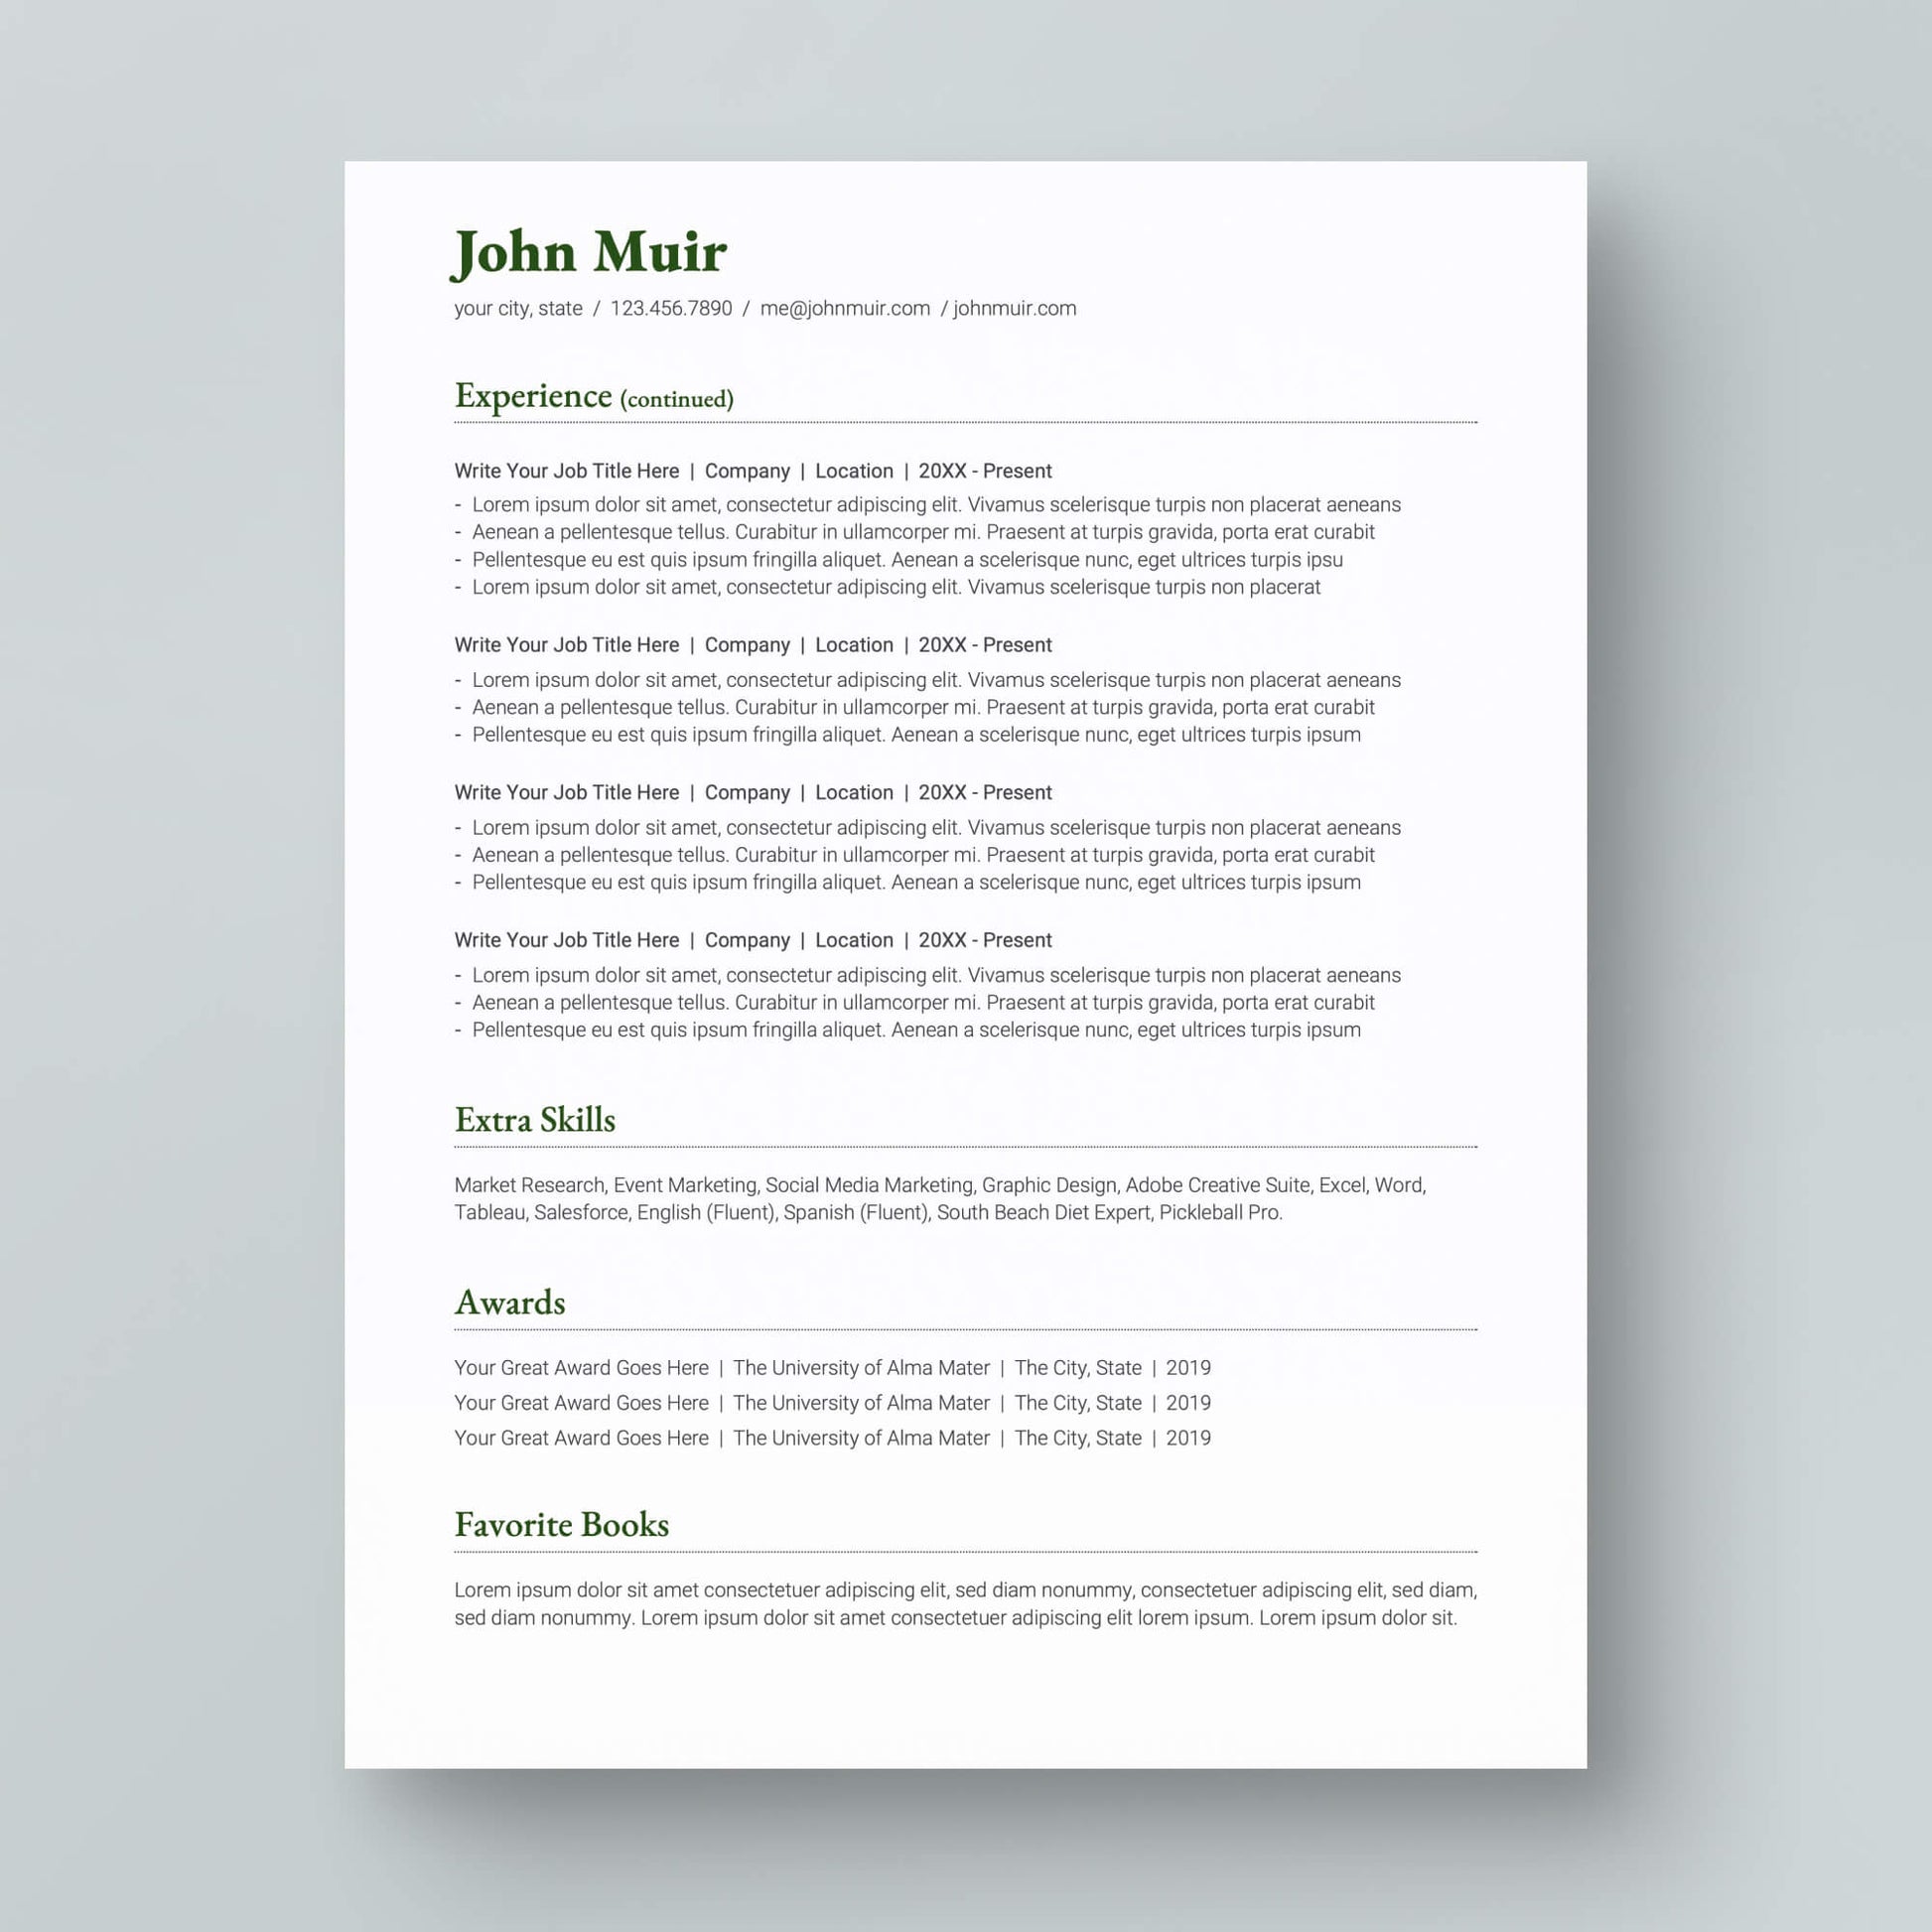 Resume Template: John Muir - MioDocs